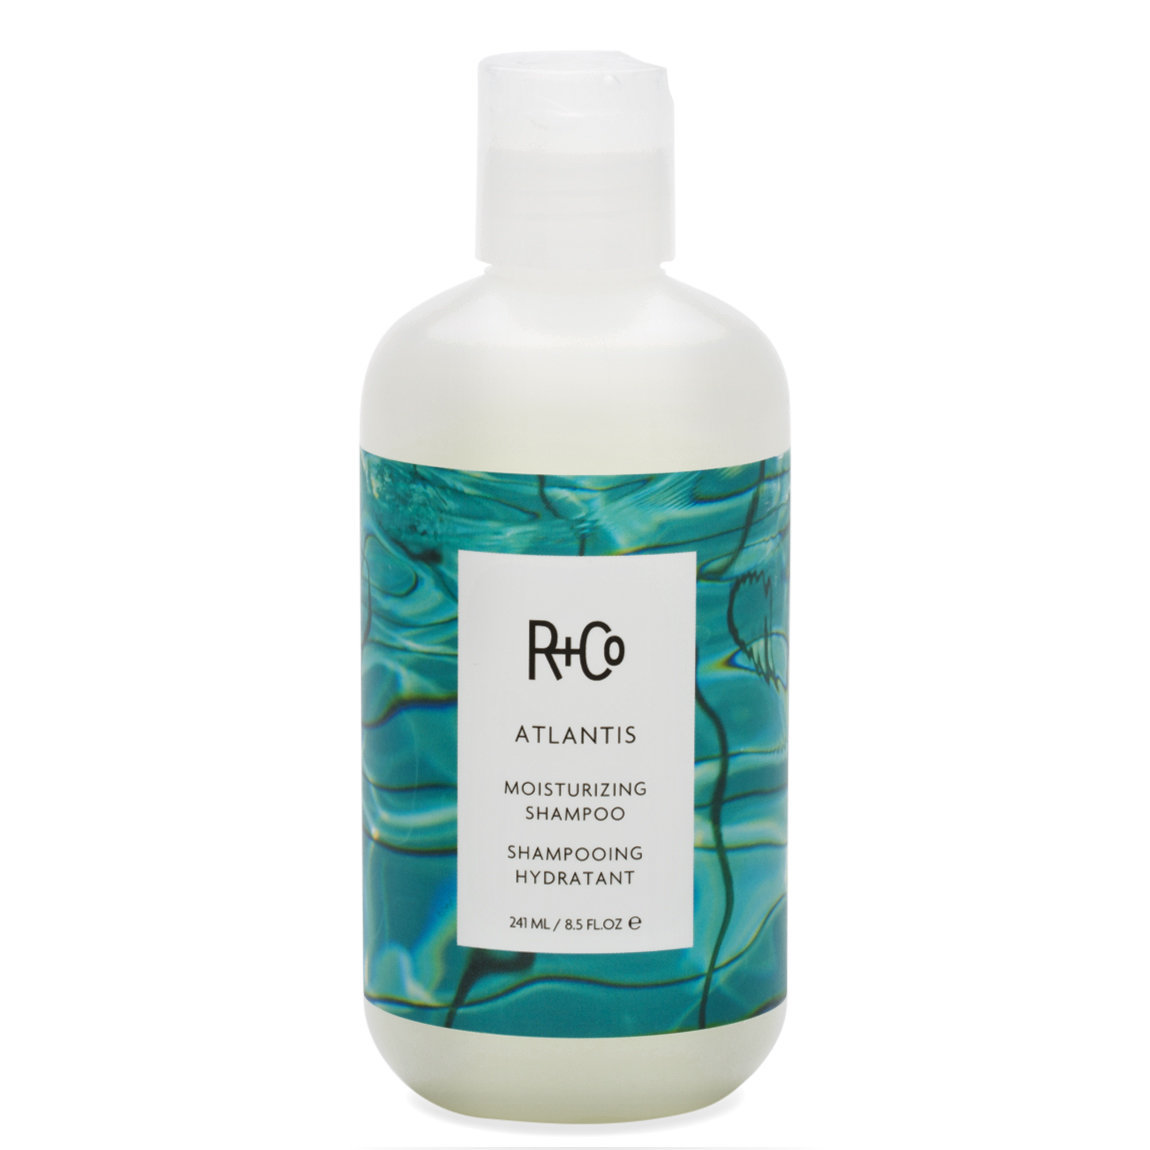 R+Co Atlantis Moisturizing Shampoo 8.5 oz alternative view 1 - product swatch.